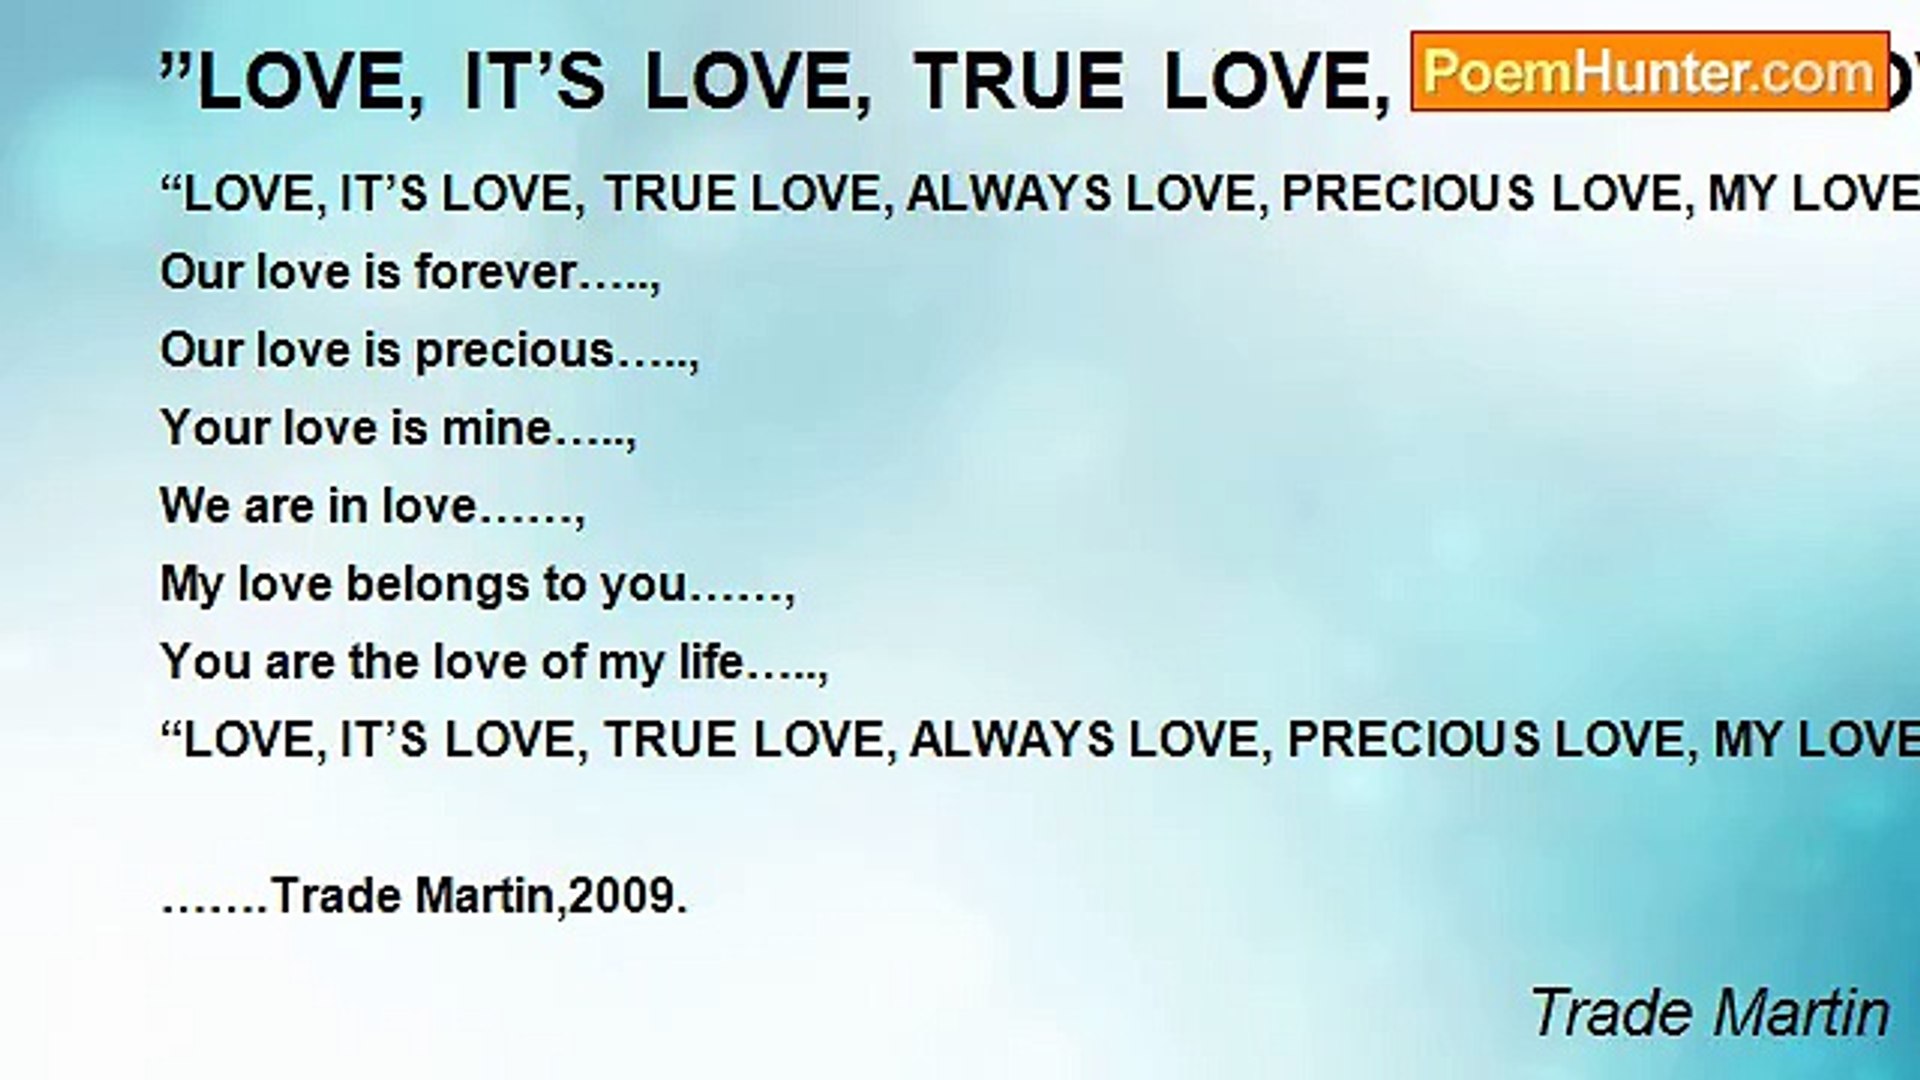 ⁣Trade Martin -  ”LOVE, IT’S LOVE, TRUE LOVE, ALWAYS LOVE, PRECIOUS LOVE, MY LOVE” ~~~~~~~~~~~~~~~~~~